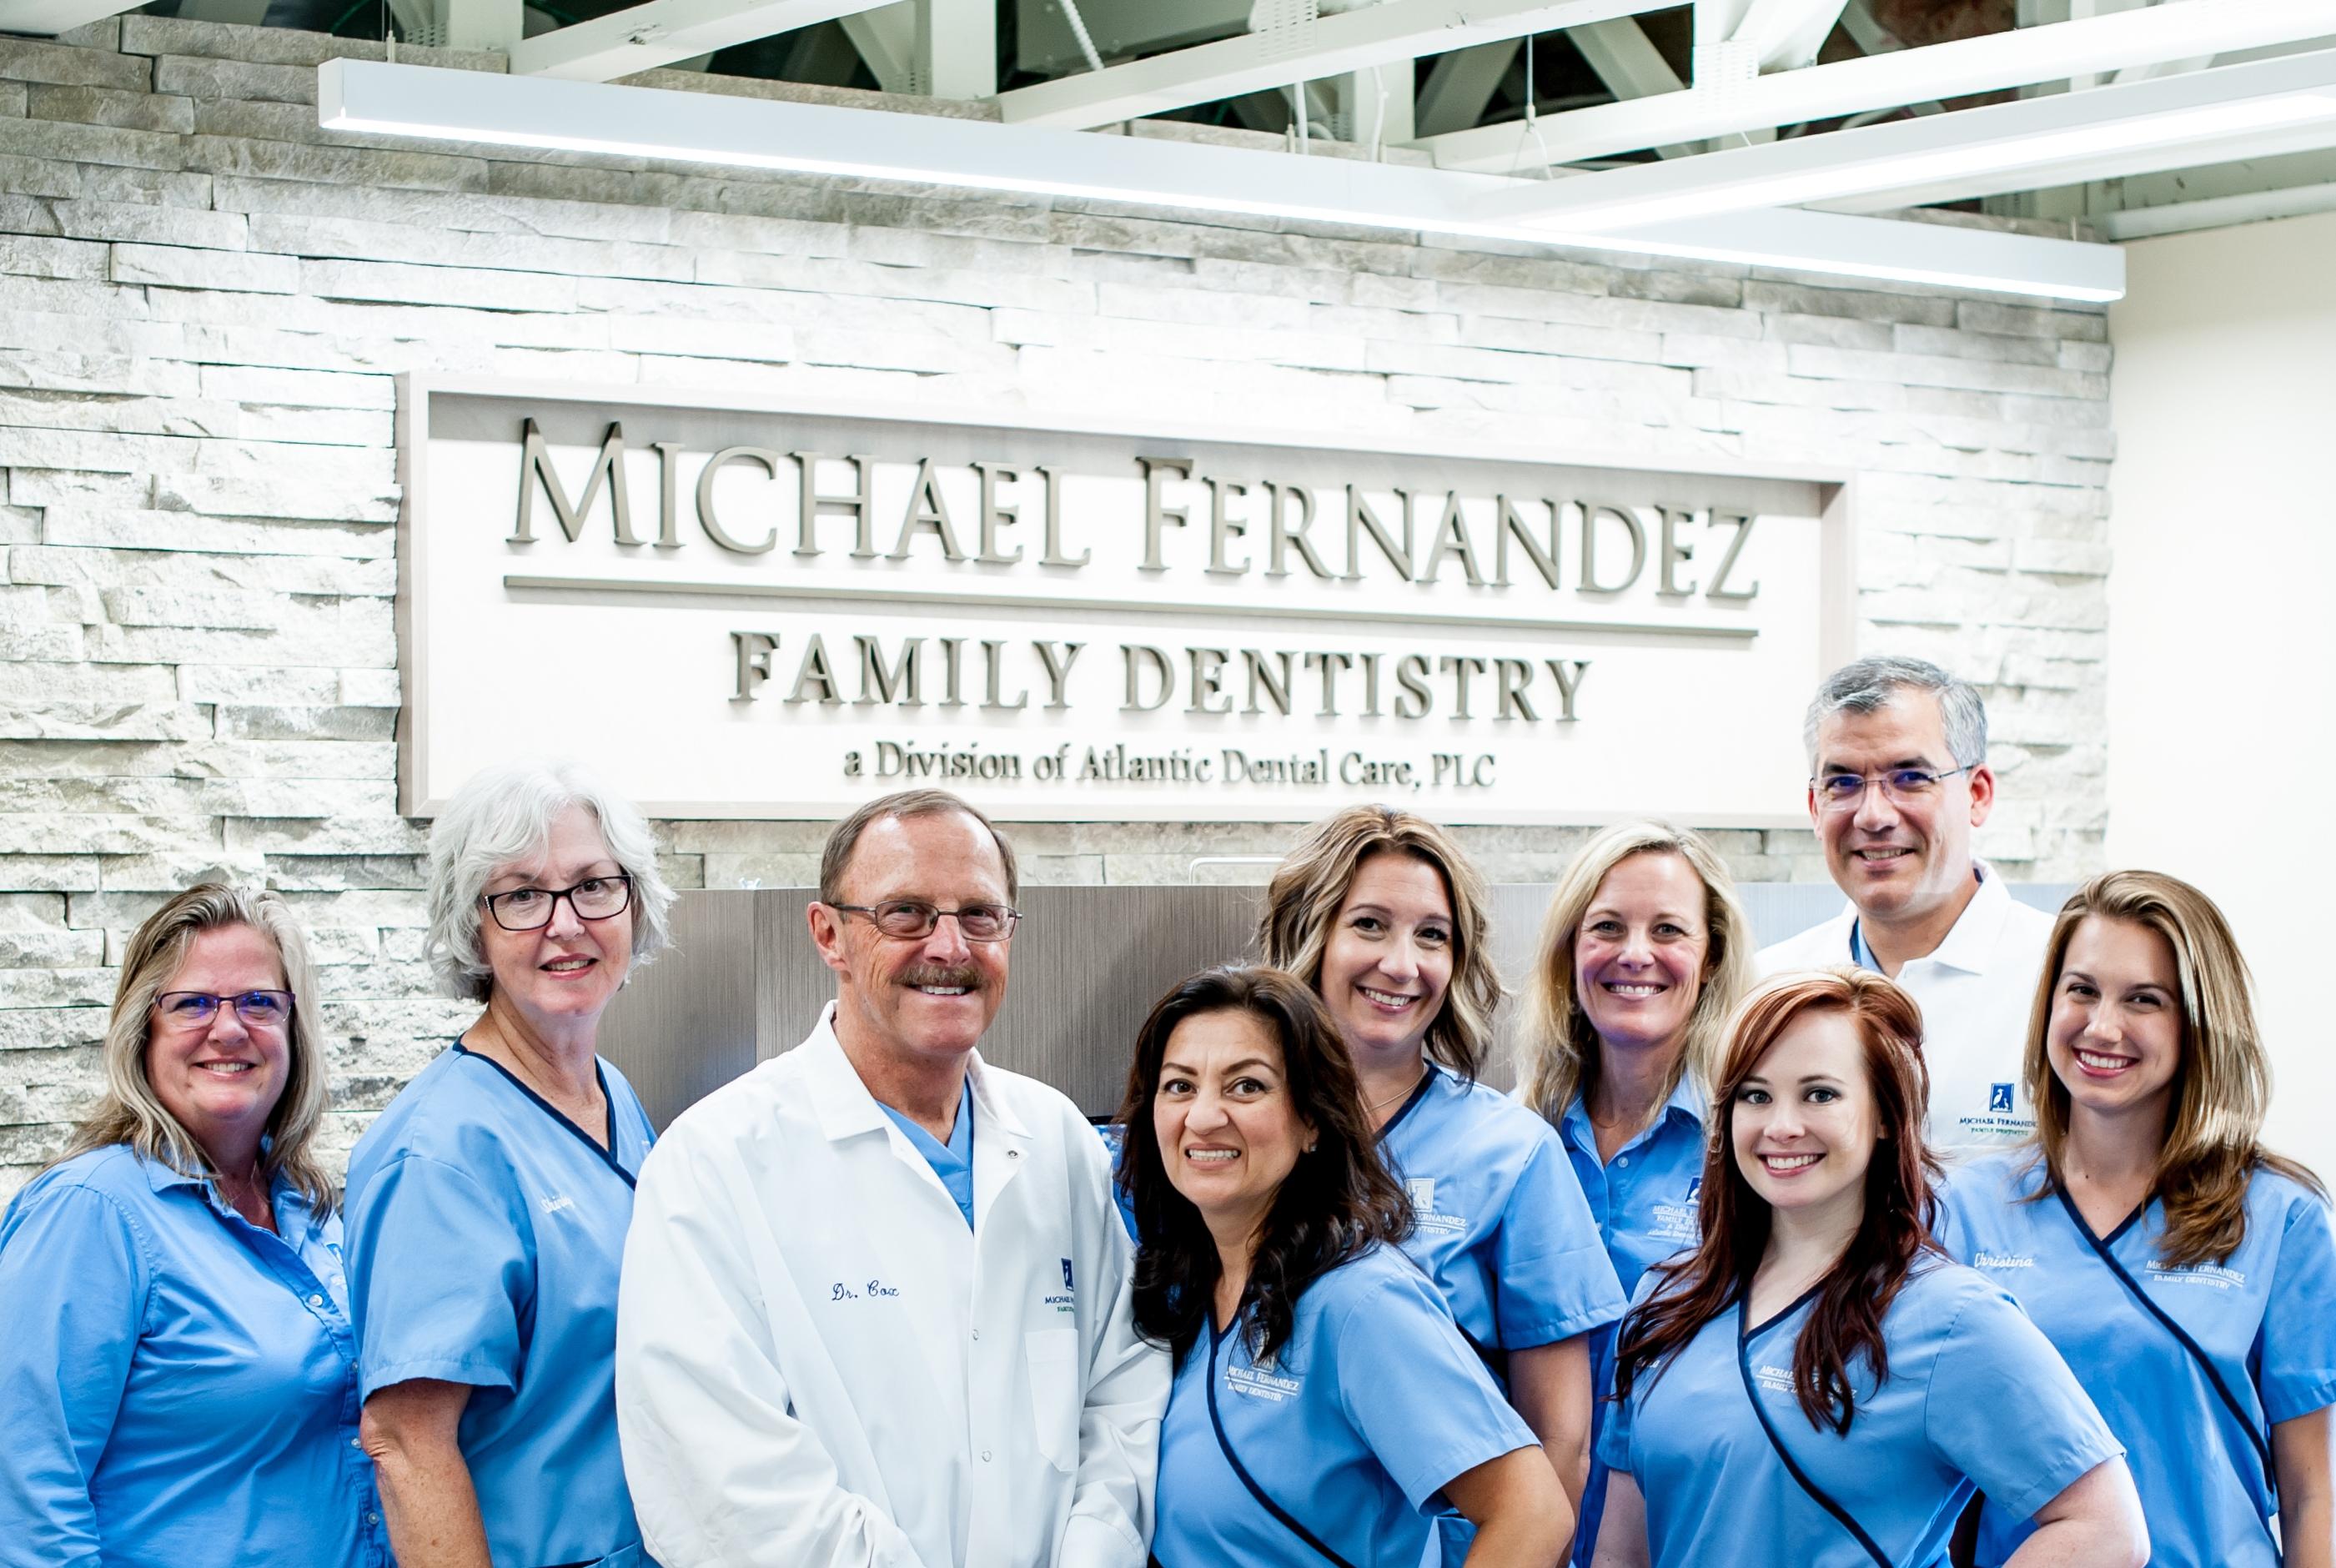 Michael Fernandez Family Dentistry Photo